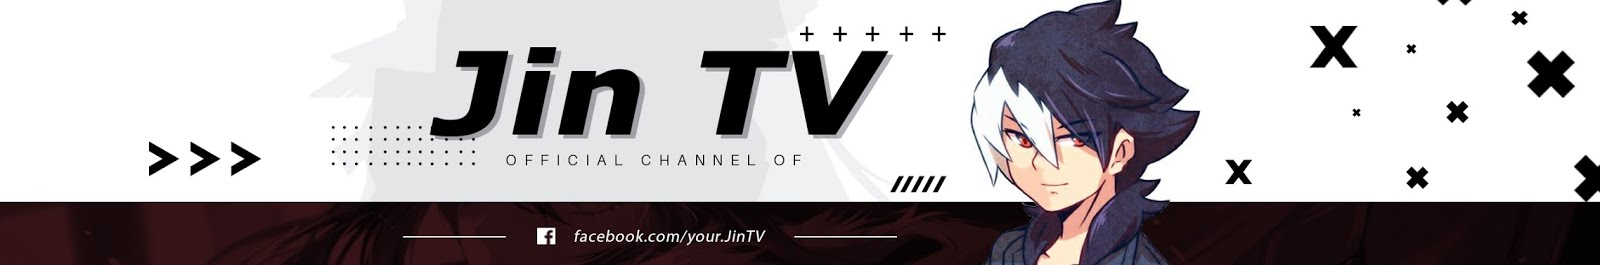 Jin TV 